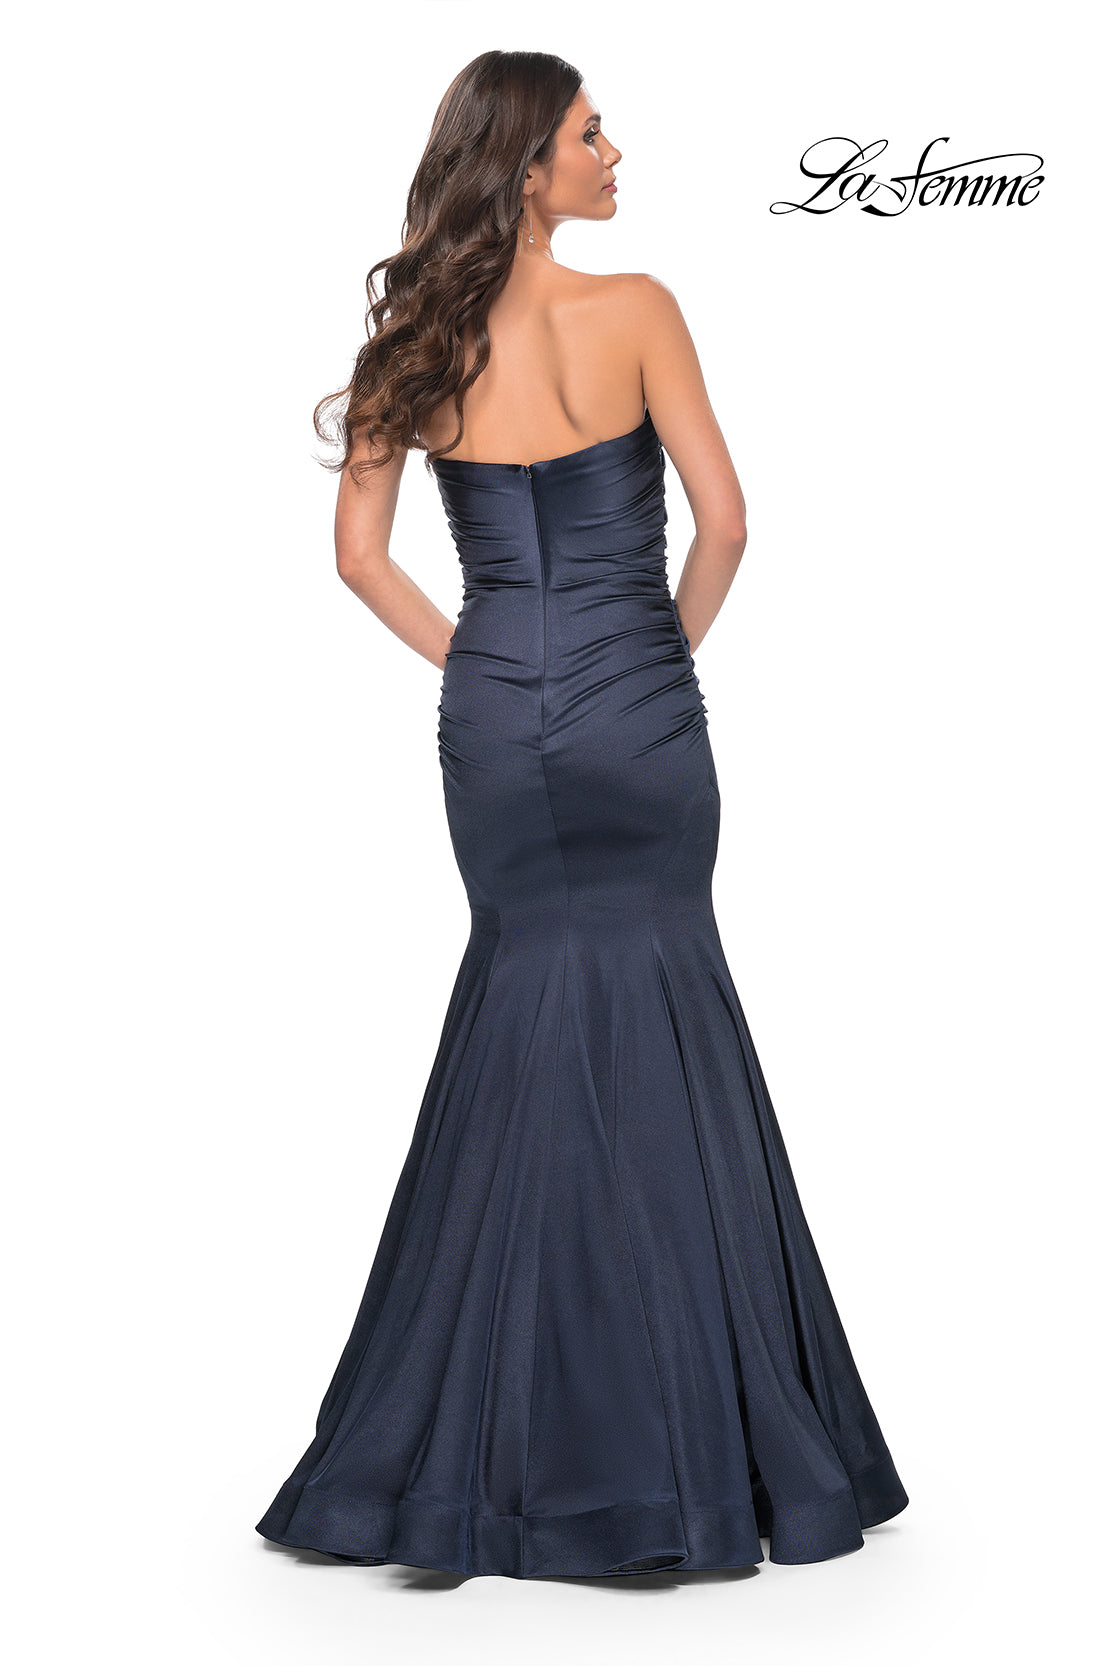 La-Femme-31980-Strapless-Neckline-Zipper-Back-Plain-Liquid-Jersey-Mermaid-Fitted-Navy-Evening-Dress-B-Chic-Fashions-Prom-Dress